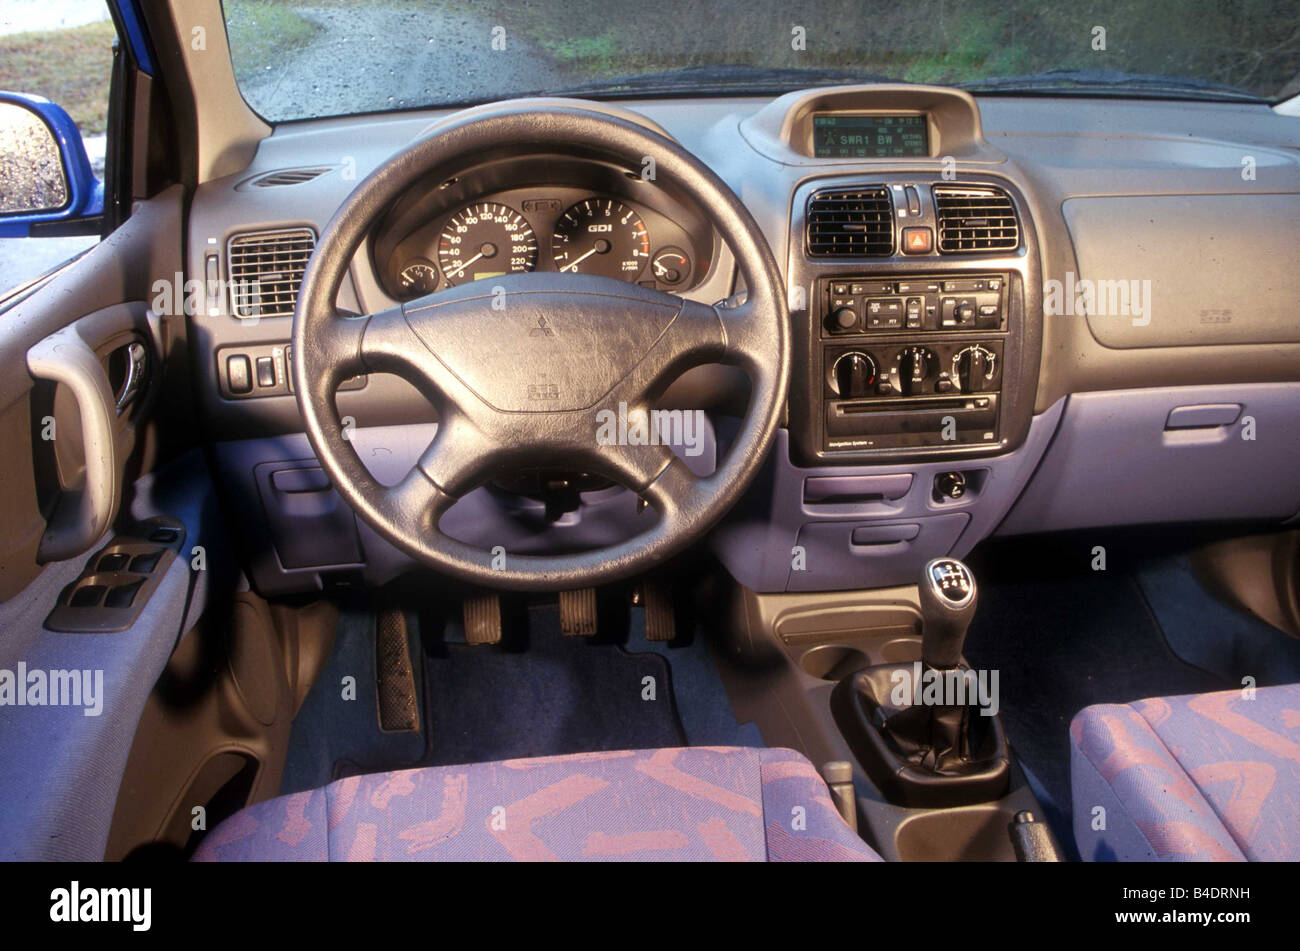 Auto, Mitsubishi Space Star GDI, Van, Baujahr 1999-2002, blau